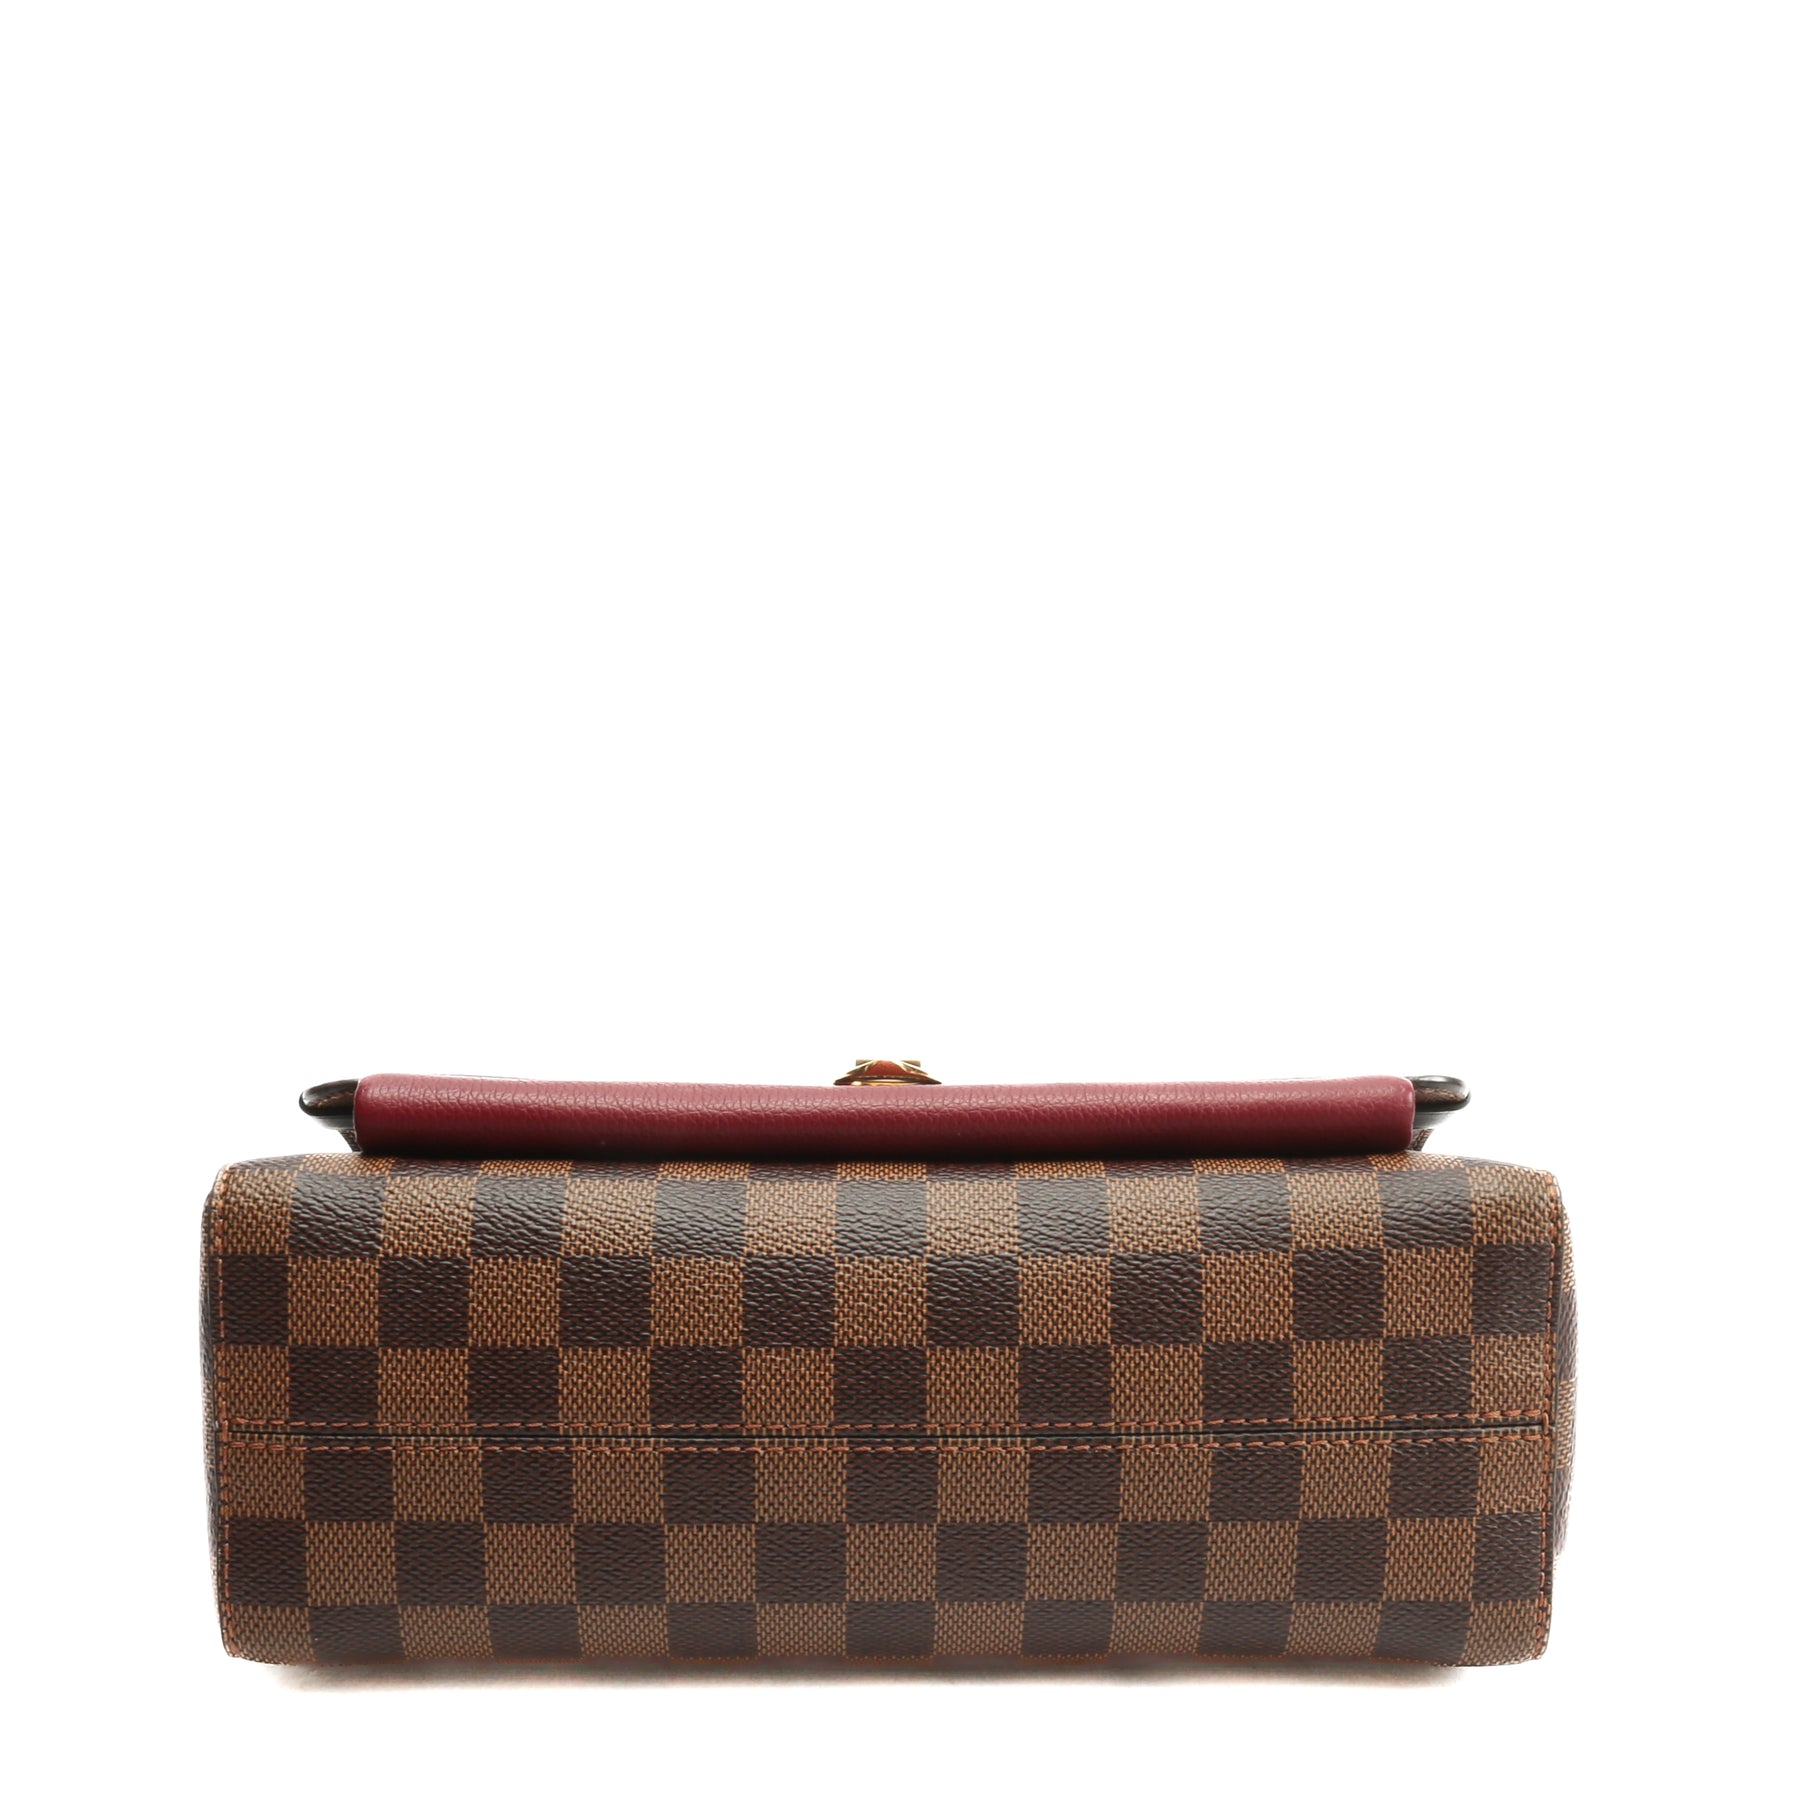 View 2 - Damier Ebene Handbags All Handbags Vavin PM, Louis Vuitton ®